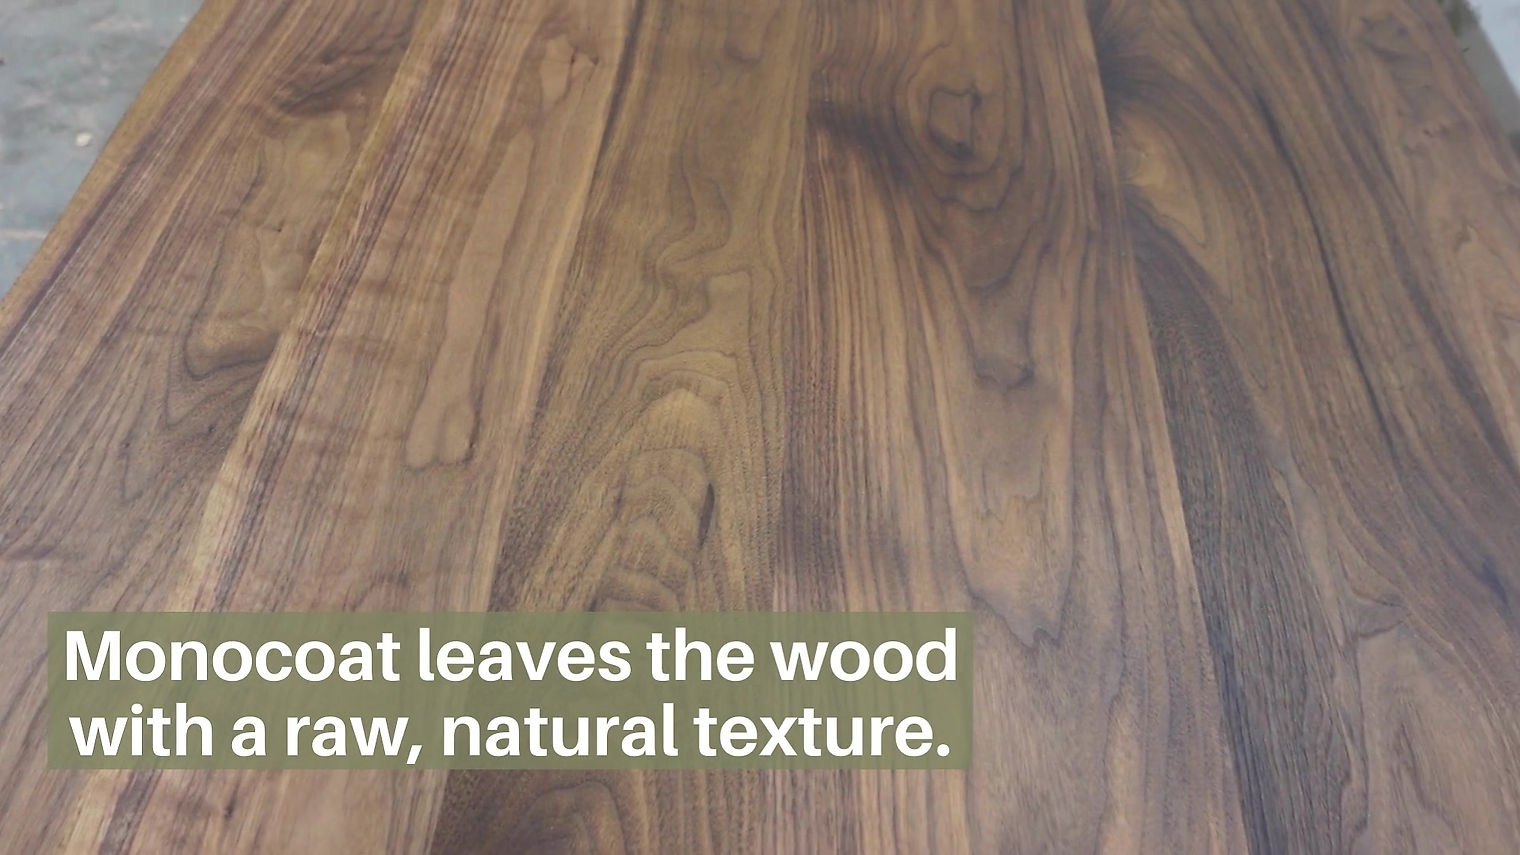 Hardwood Lumber and Millwork